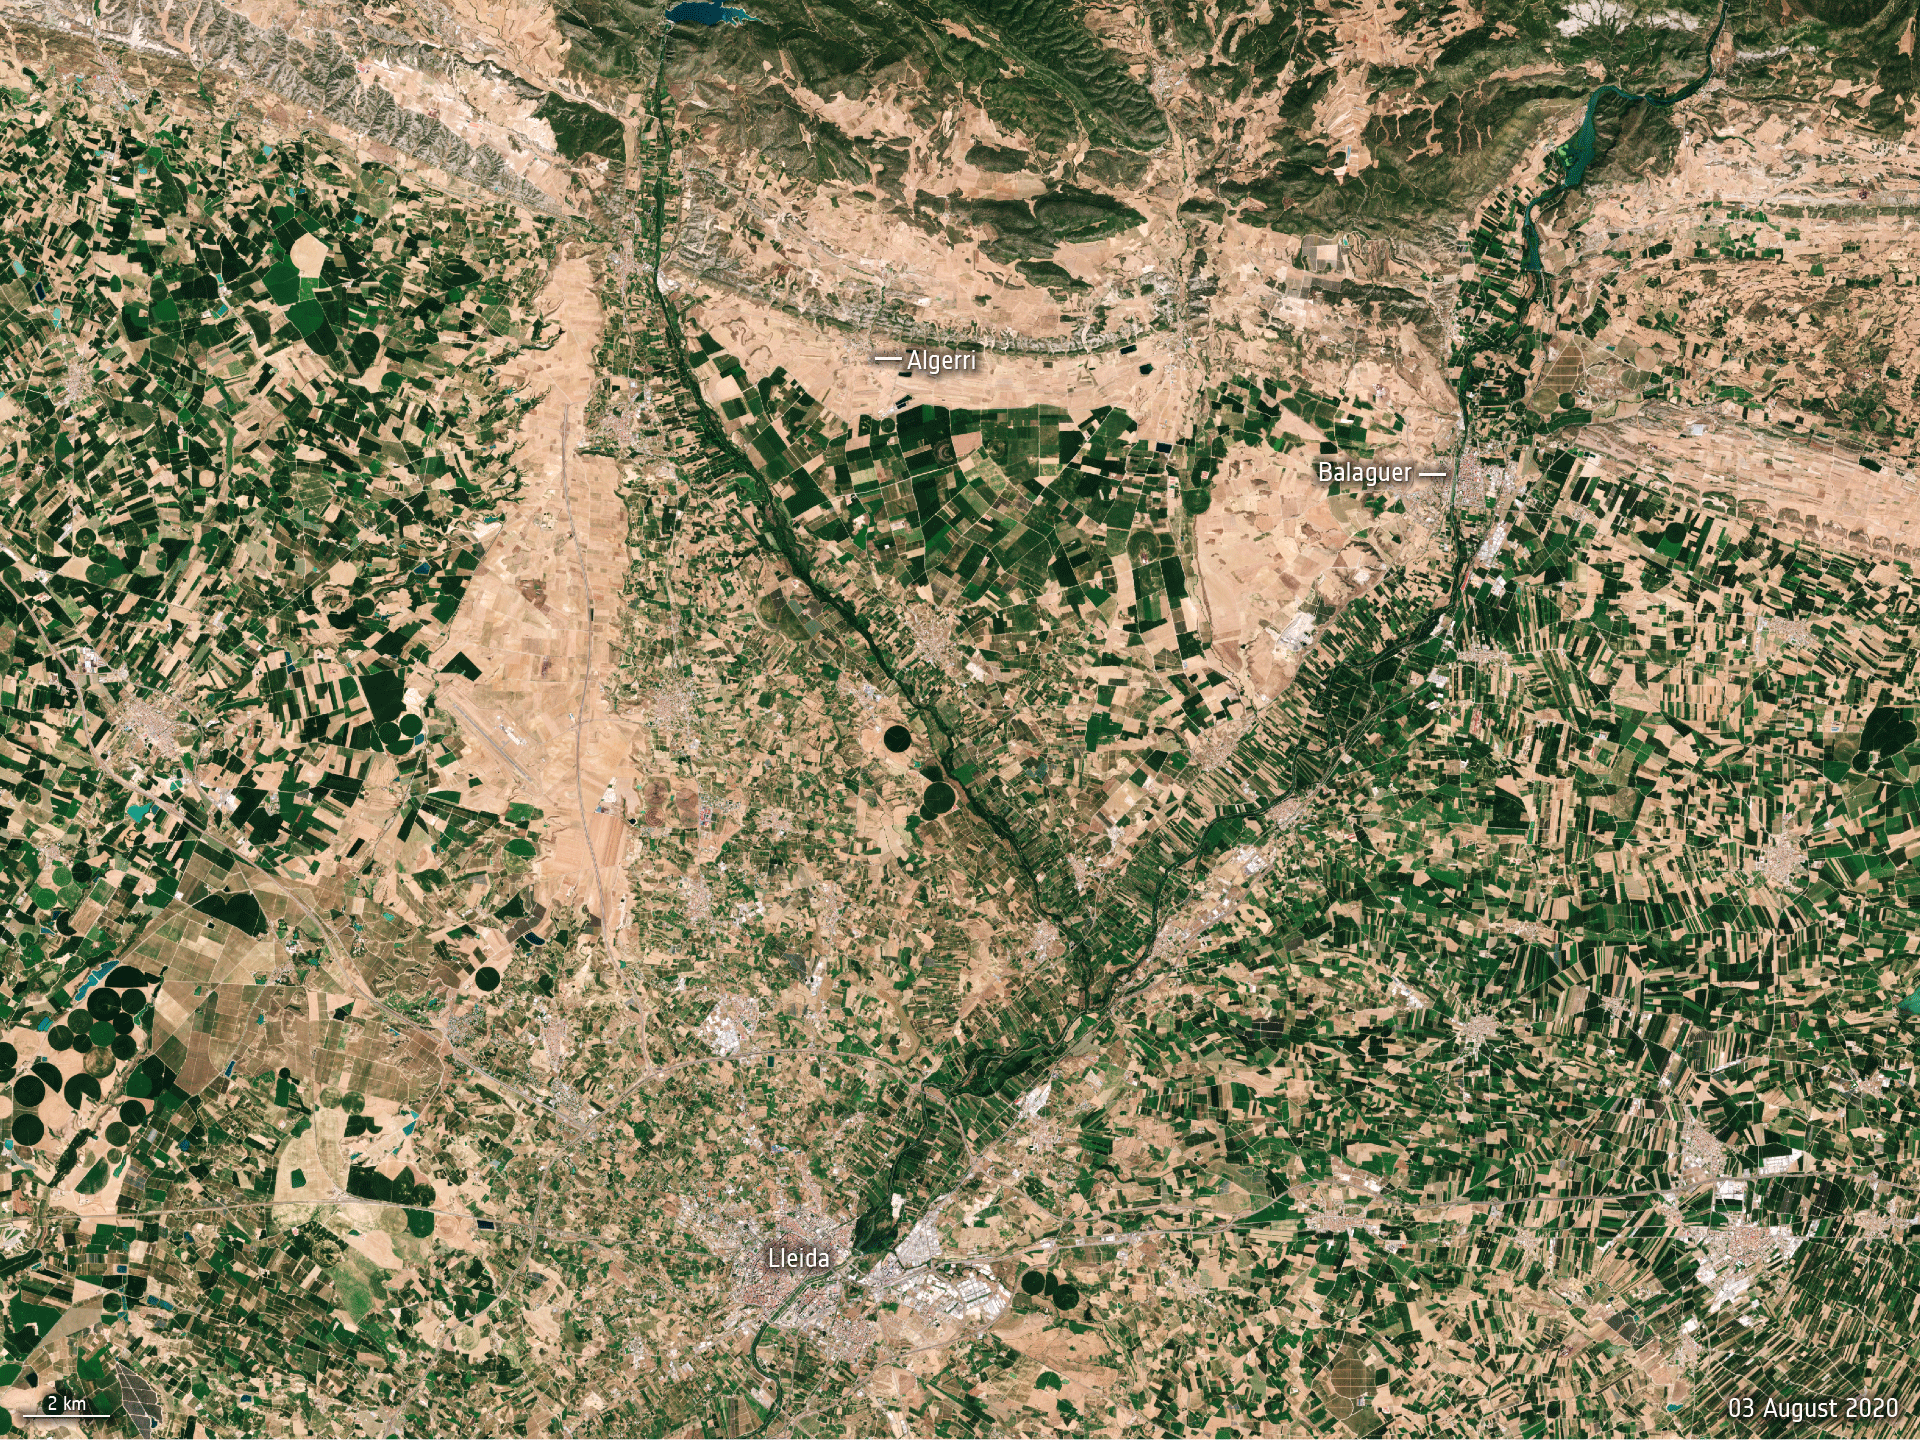 Algerri-Balaguer irrigation district, Spain